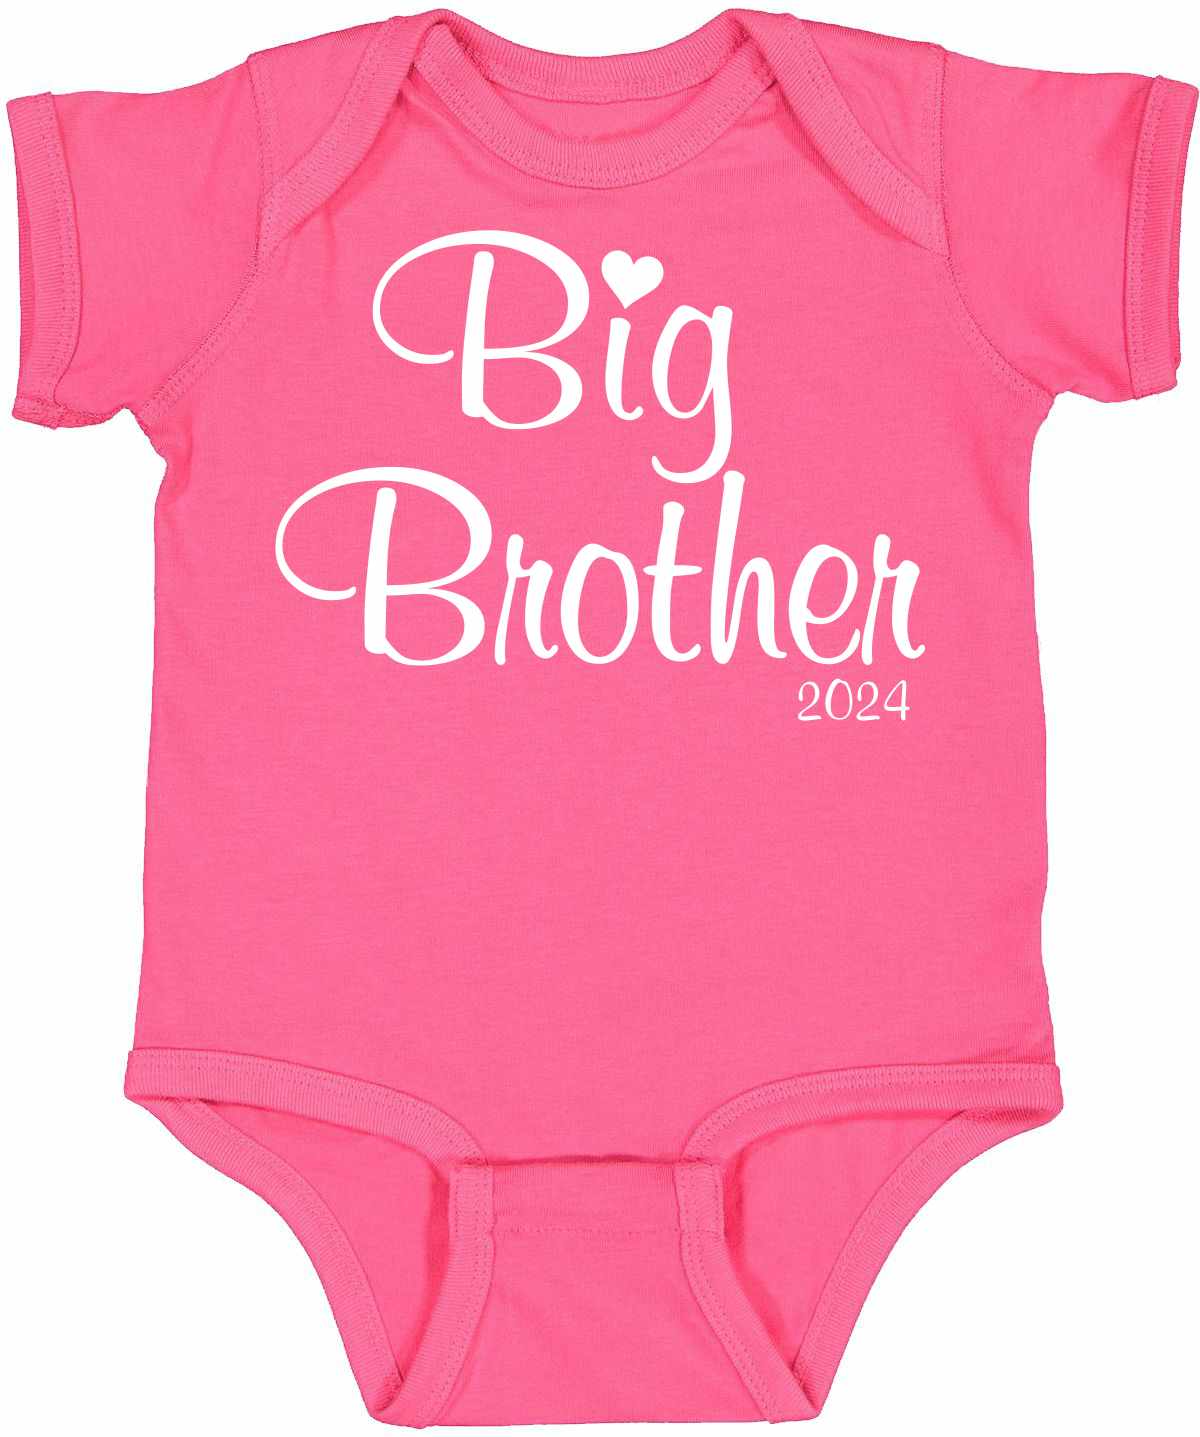 Big Brother 2024 on Infant BodySuit (#1365-10)